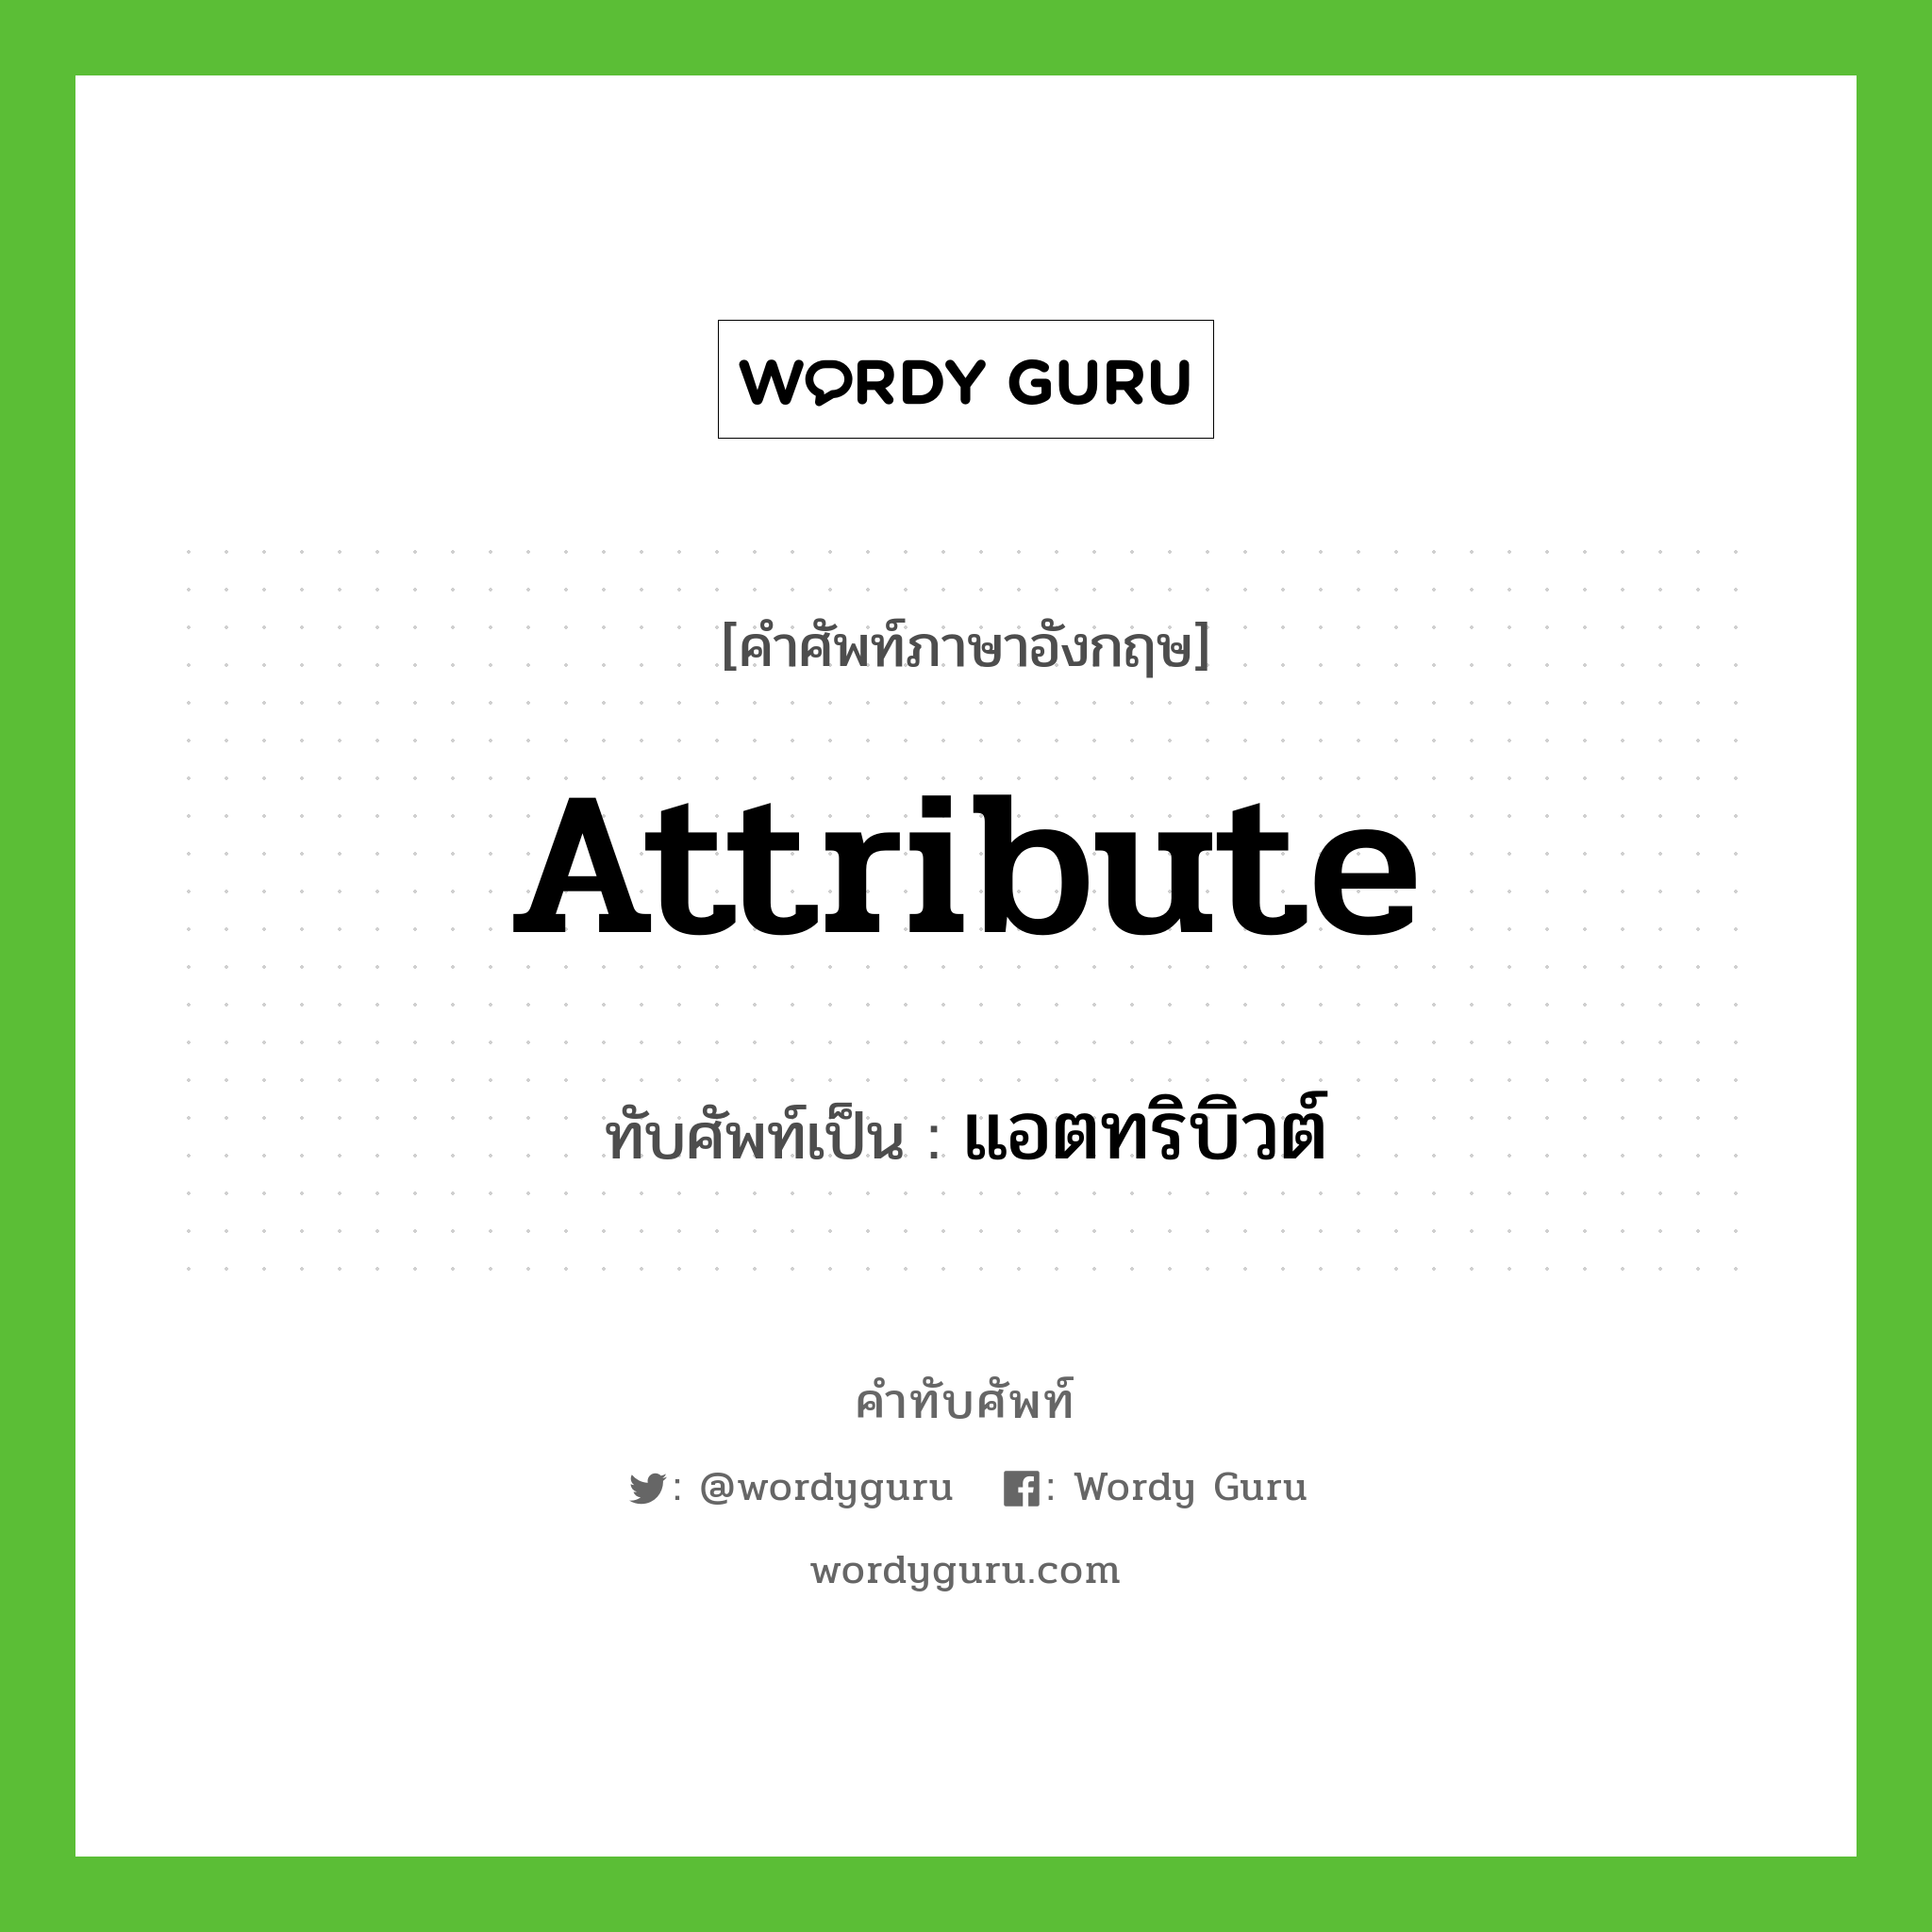 Attribute เขียนเป็นคำไทยว่าอะไร?, คำศัพท์ภาษาอังกฤษ Attribute ทับศัพท์เป็น แอตทริบิวต์